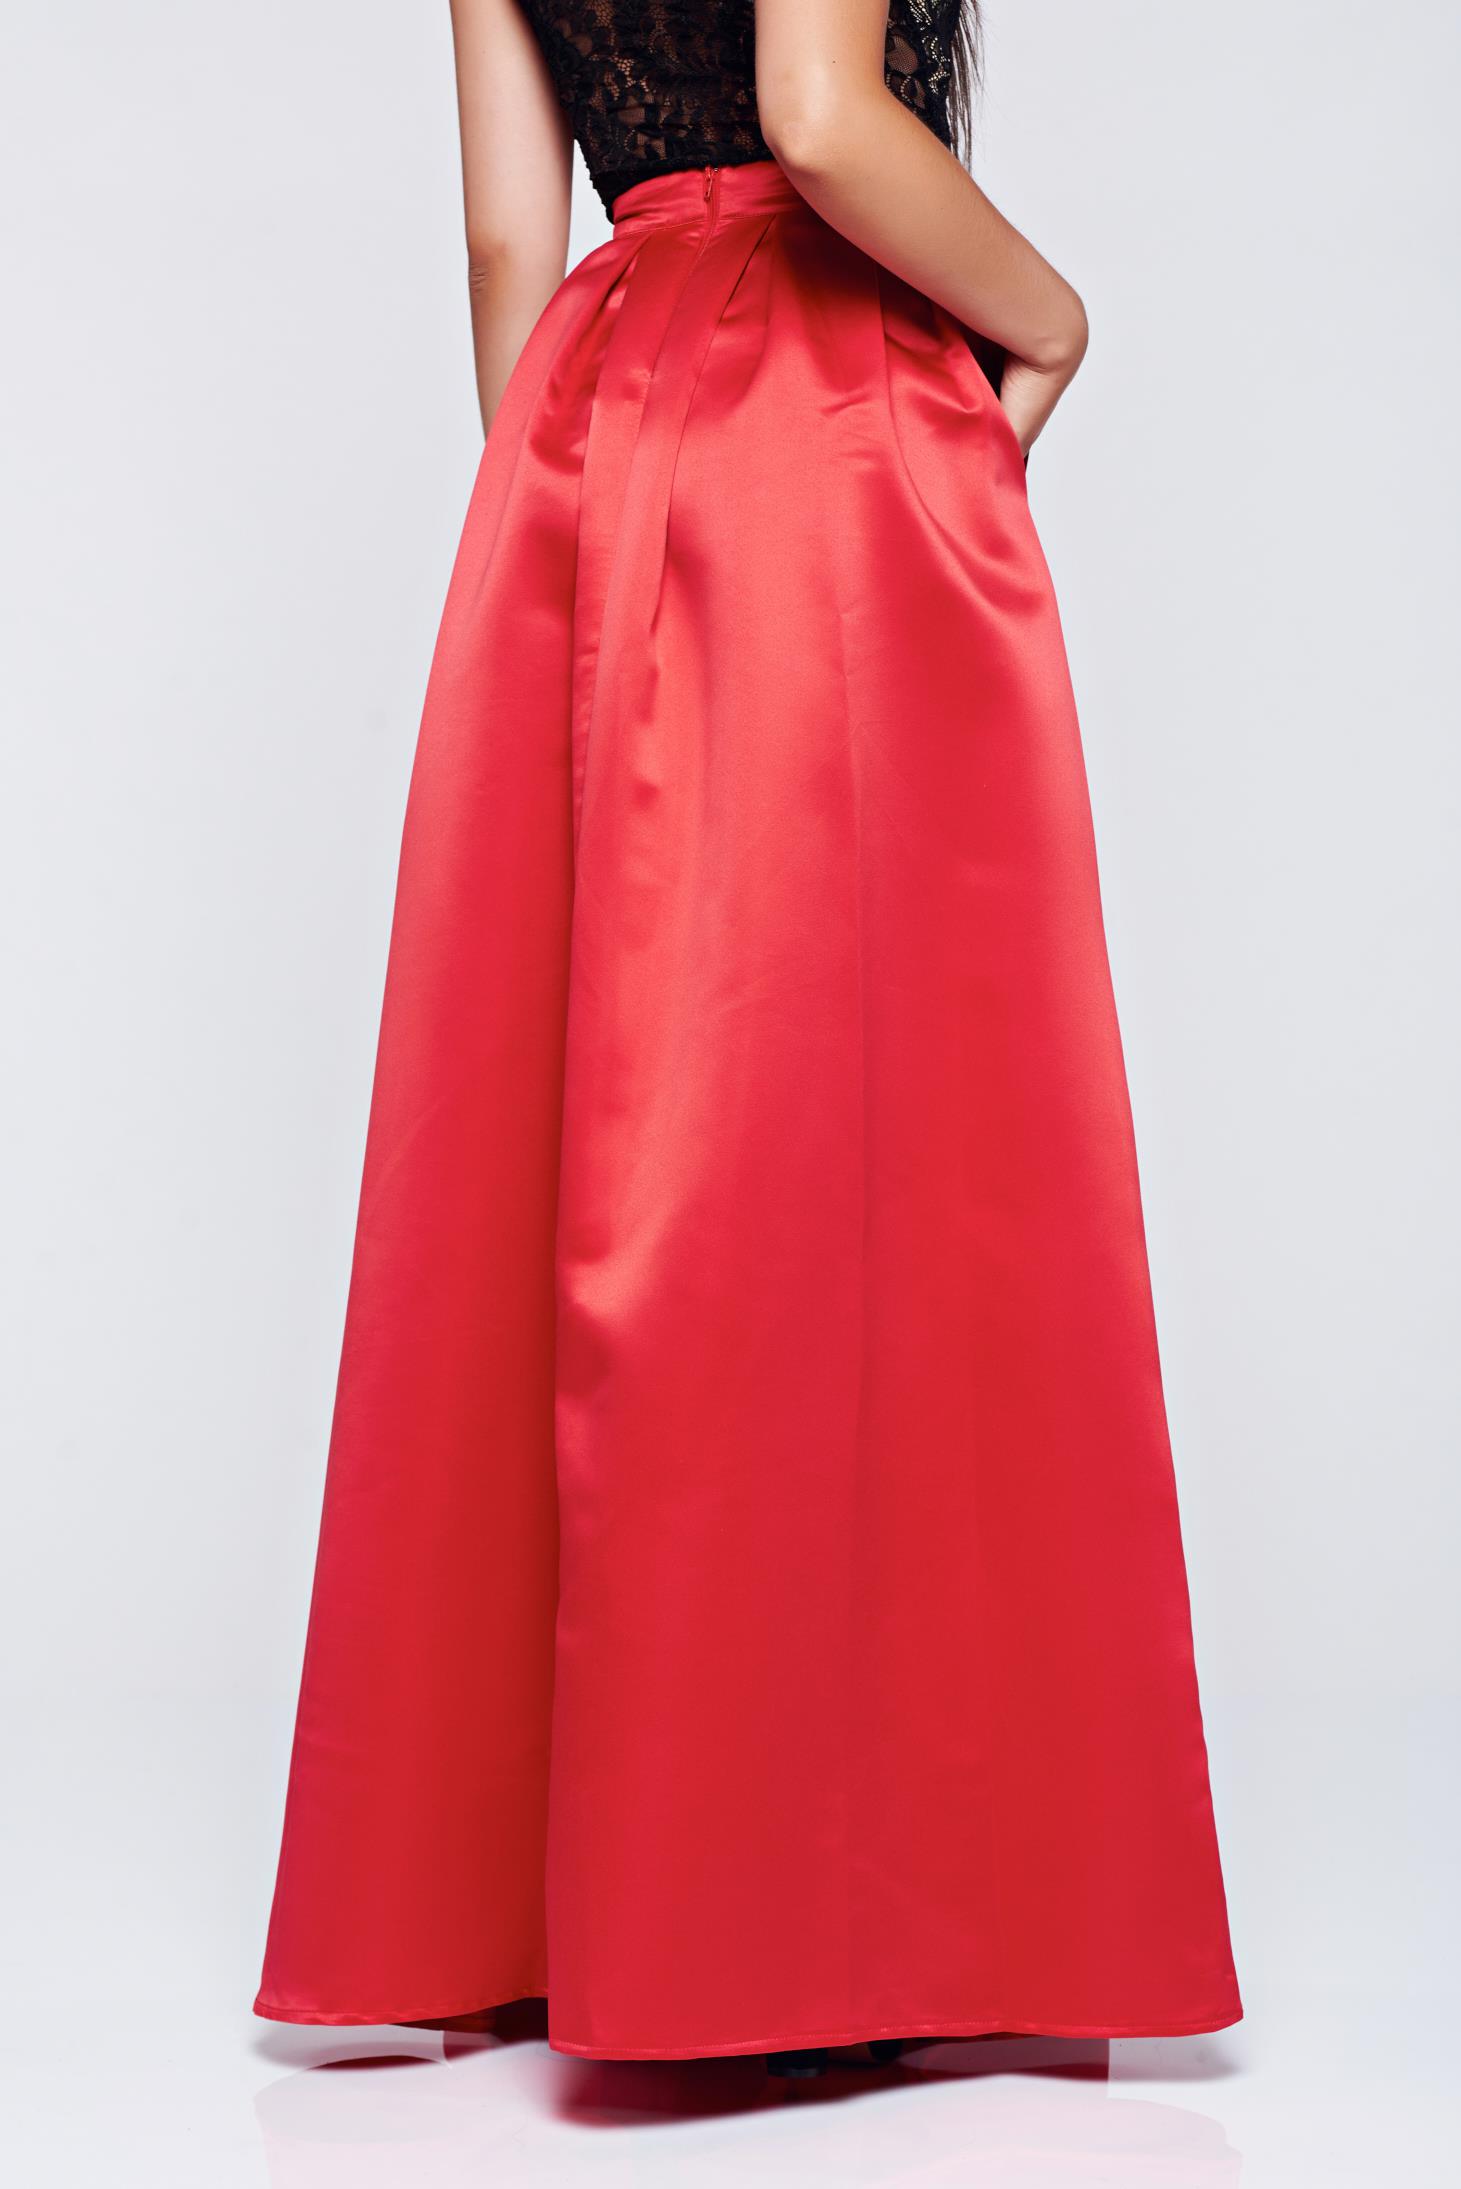 Cloche long Fofy red elegant skirt 3 - StarShinerS.com